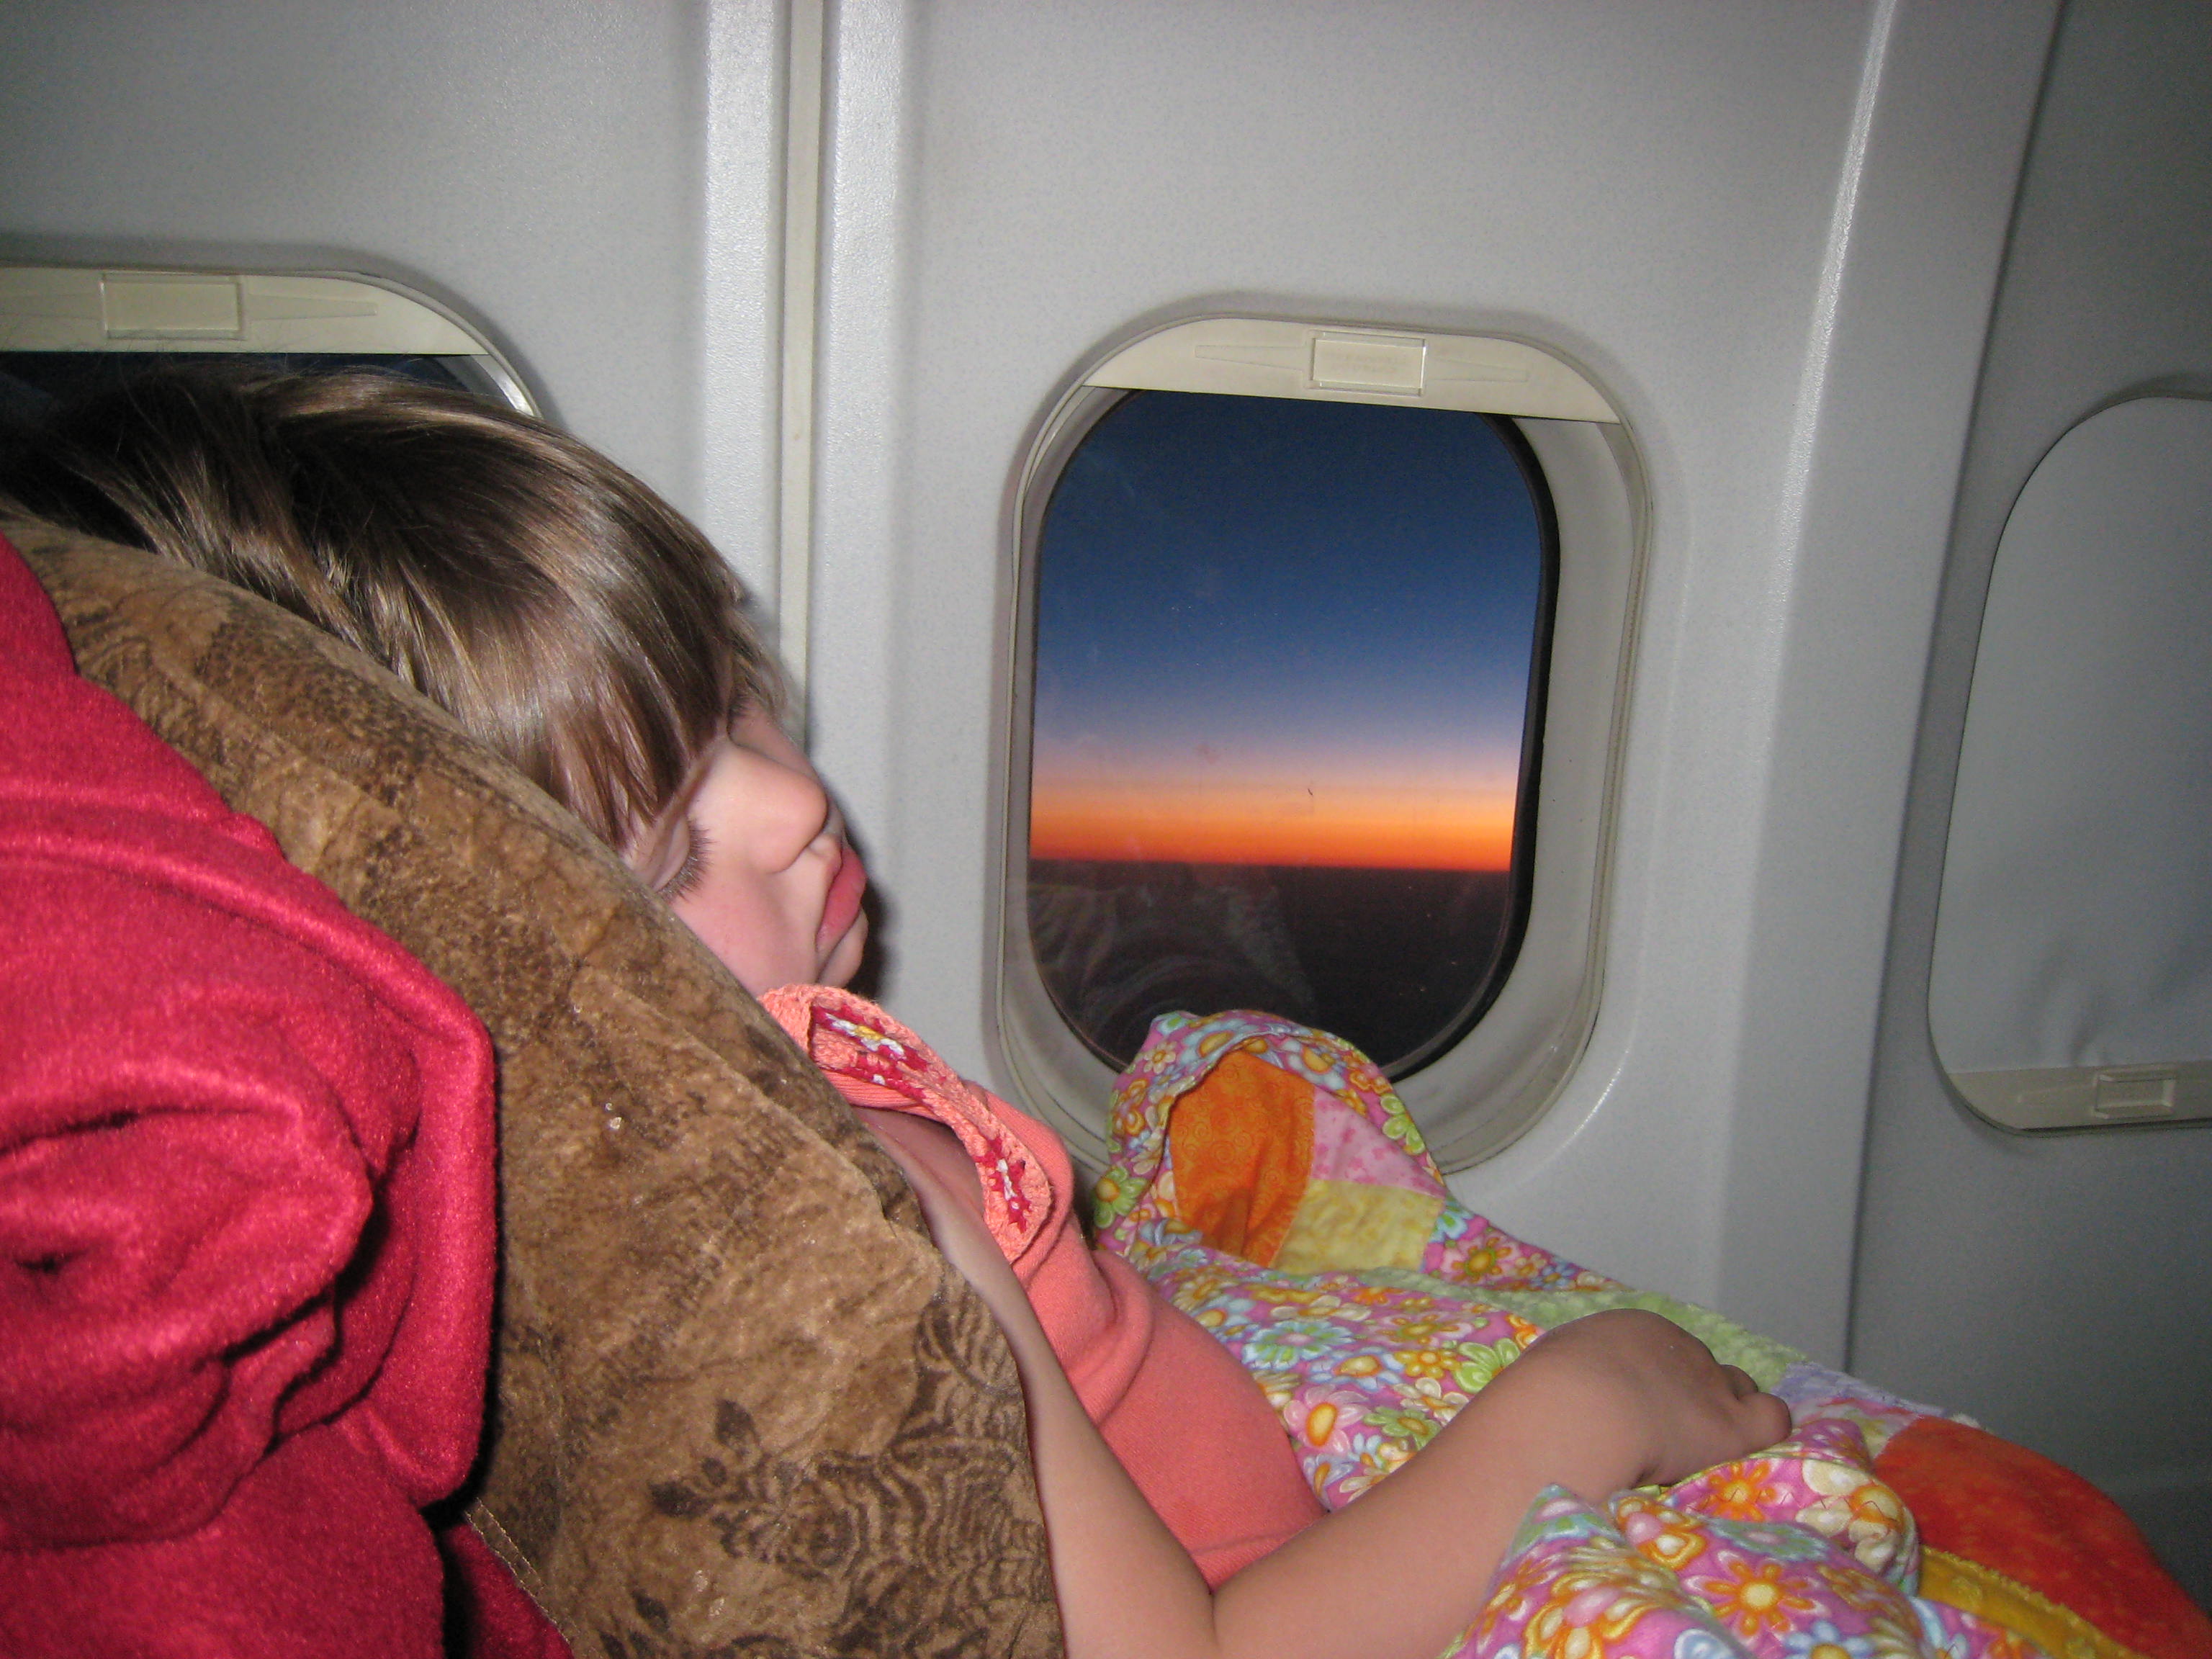 asleeponplane.jpg